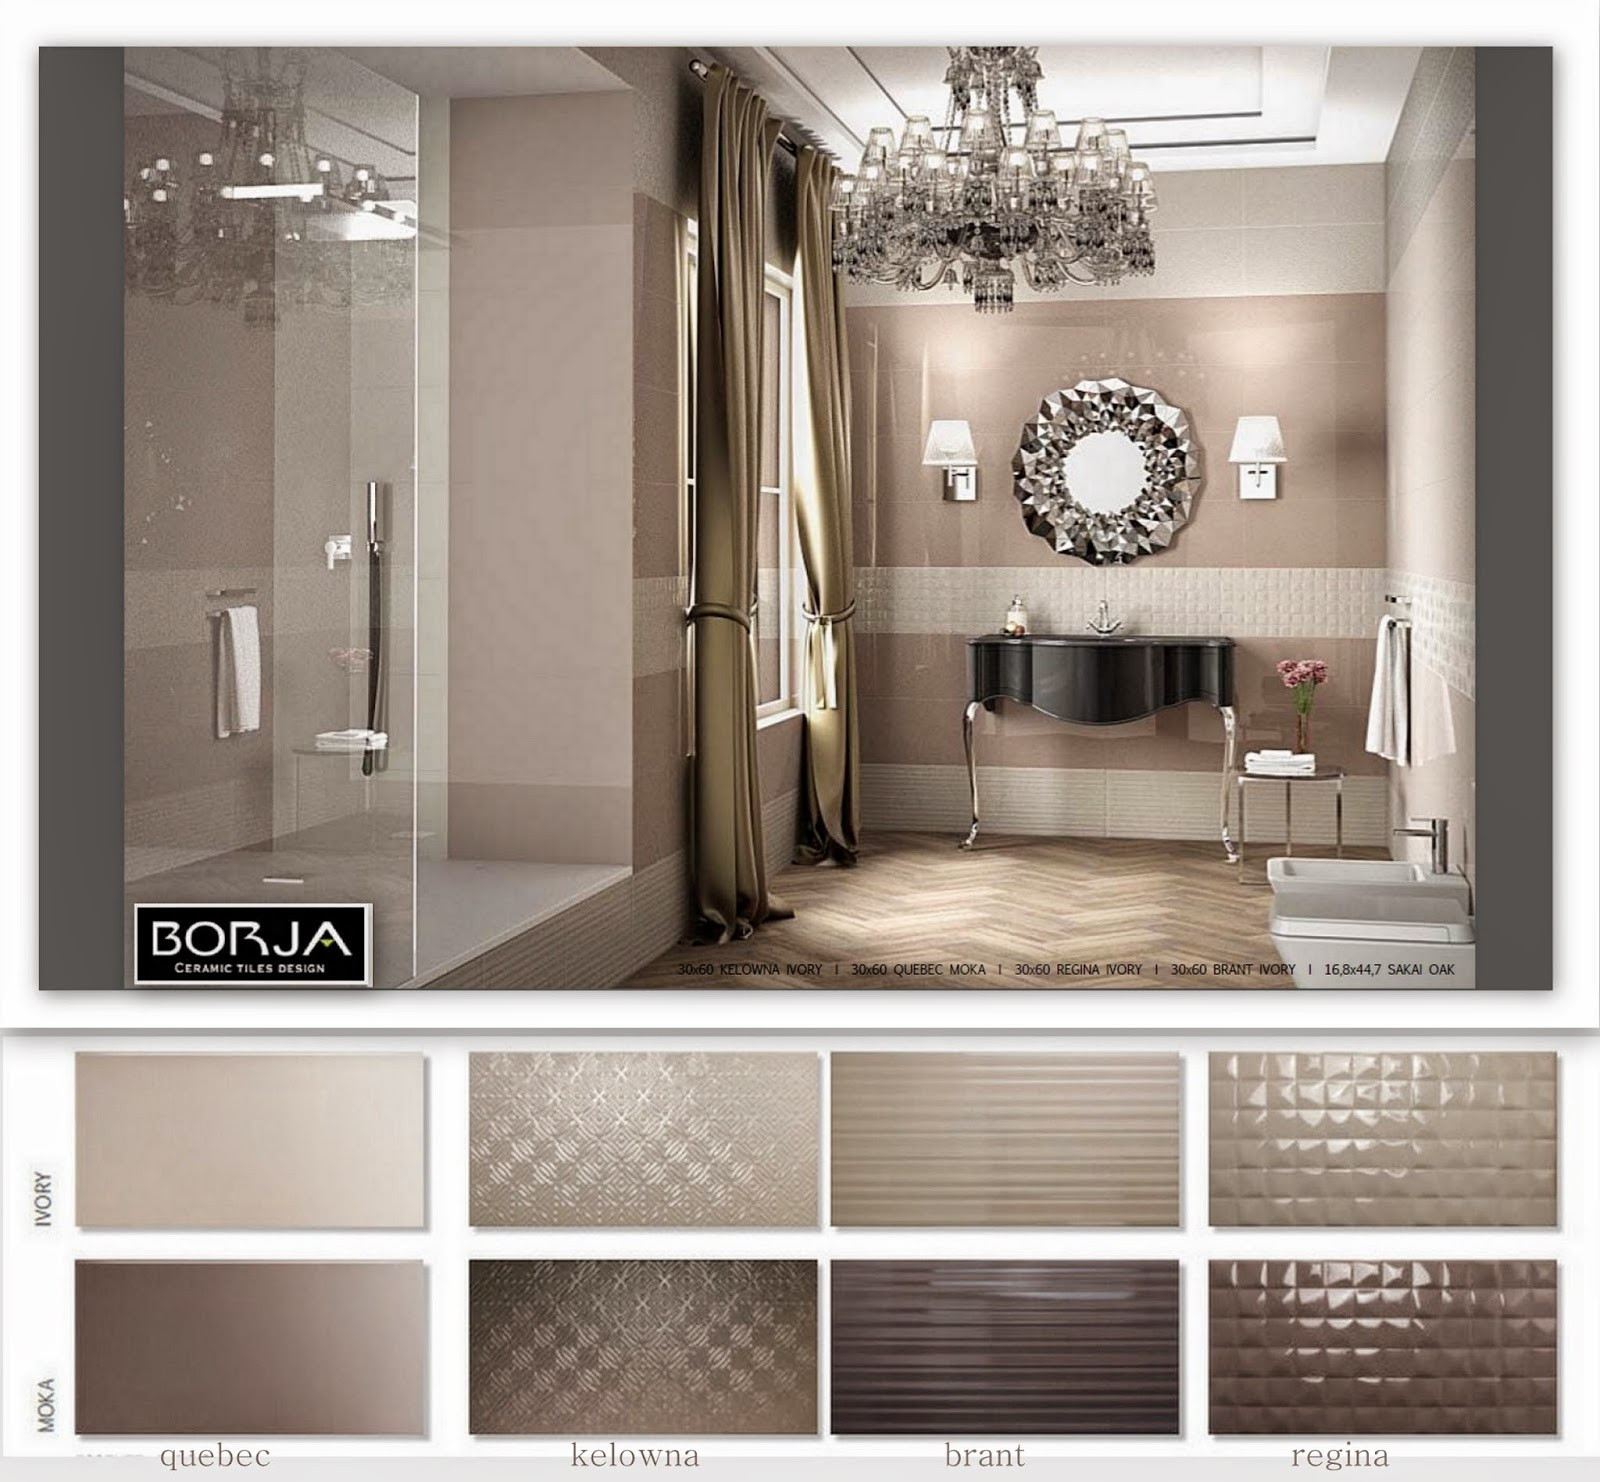 Most Popular Bathroom Tile
 BORJA CERAMIC TILES DESIGN Walls 30x60 one of the most